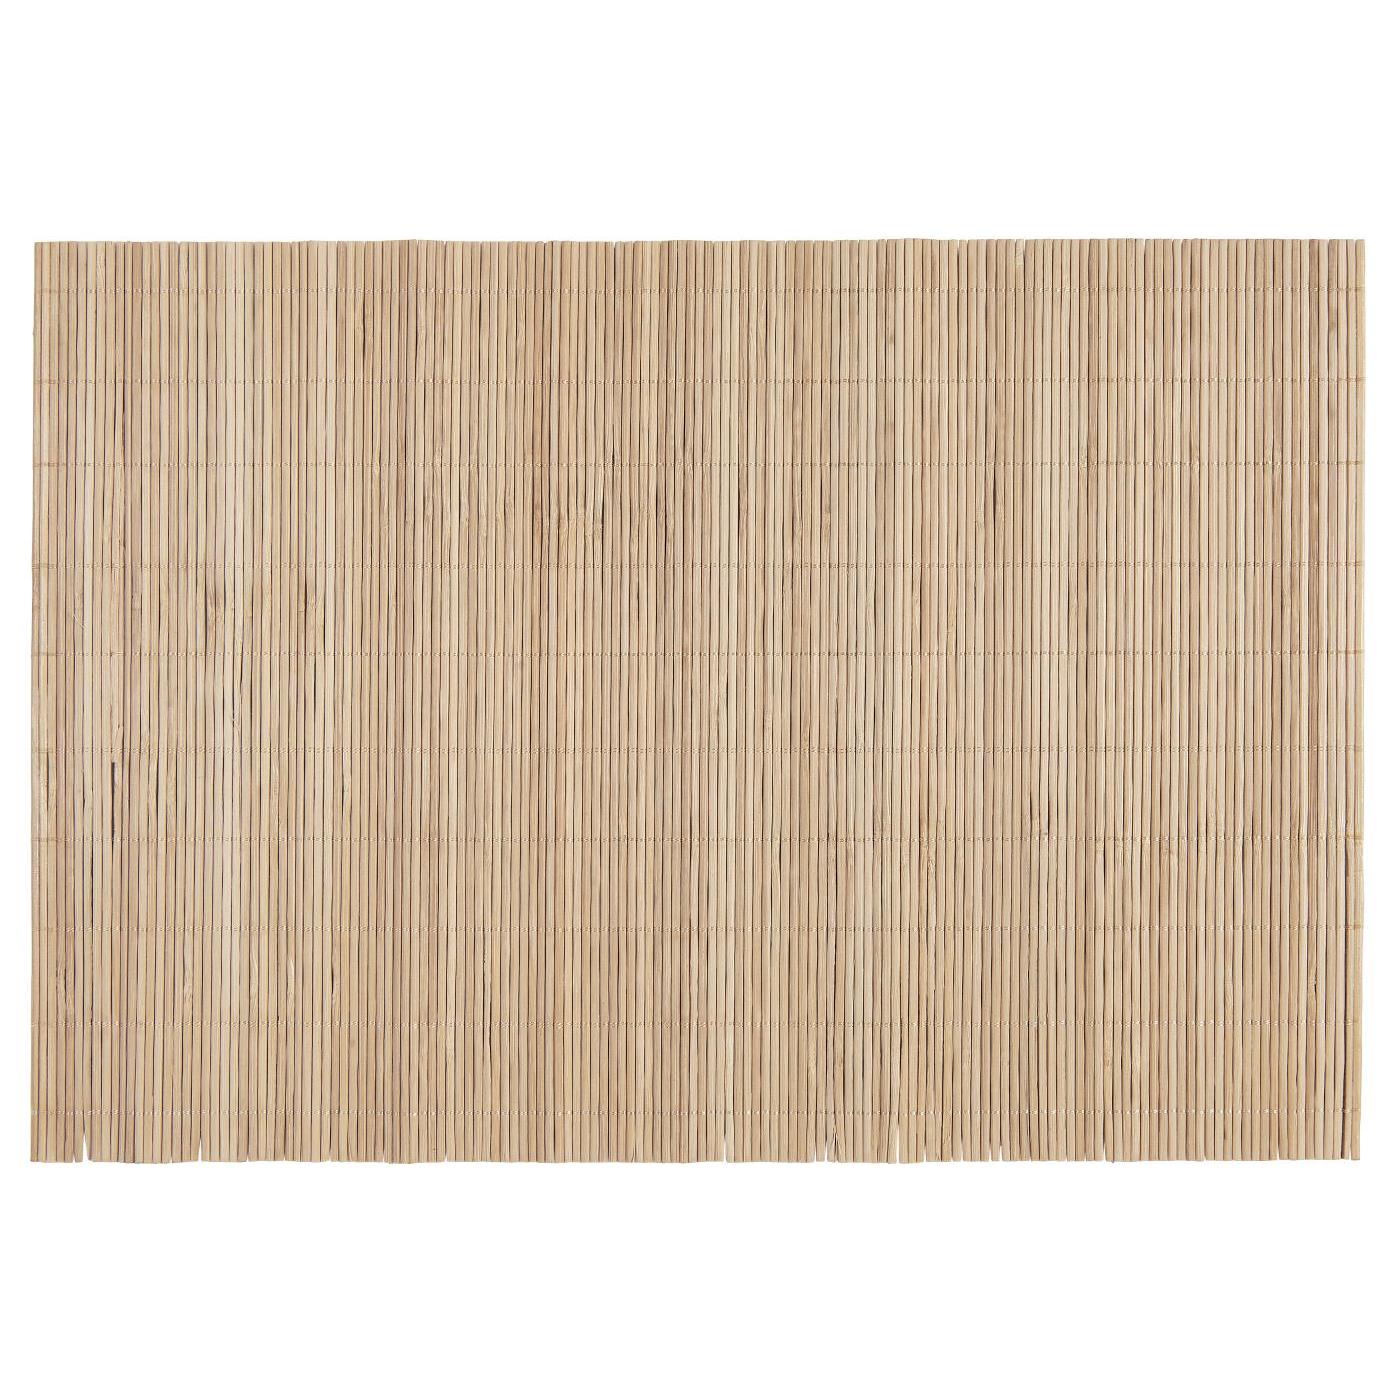 Ib Laursen - Dækkeserviet bambus natur